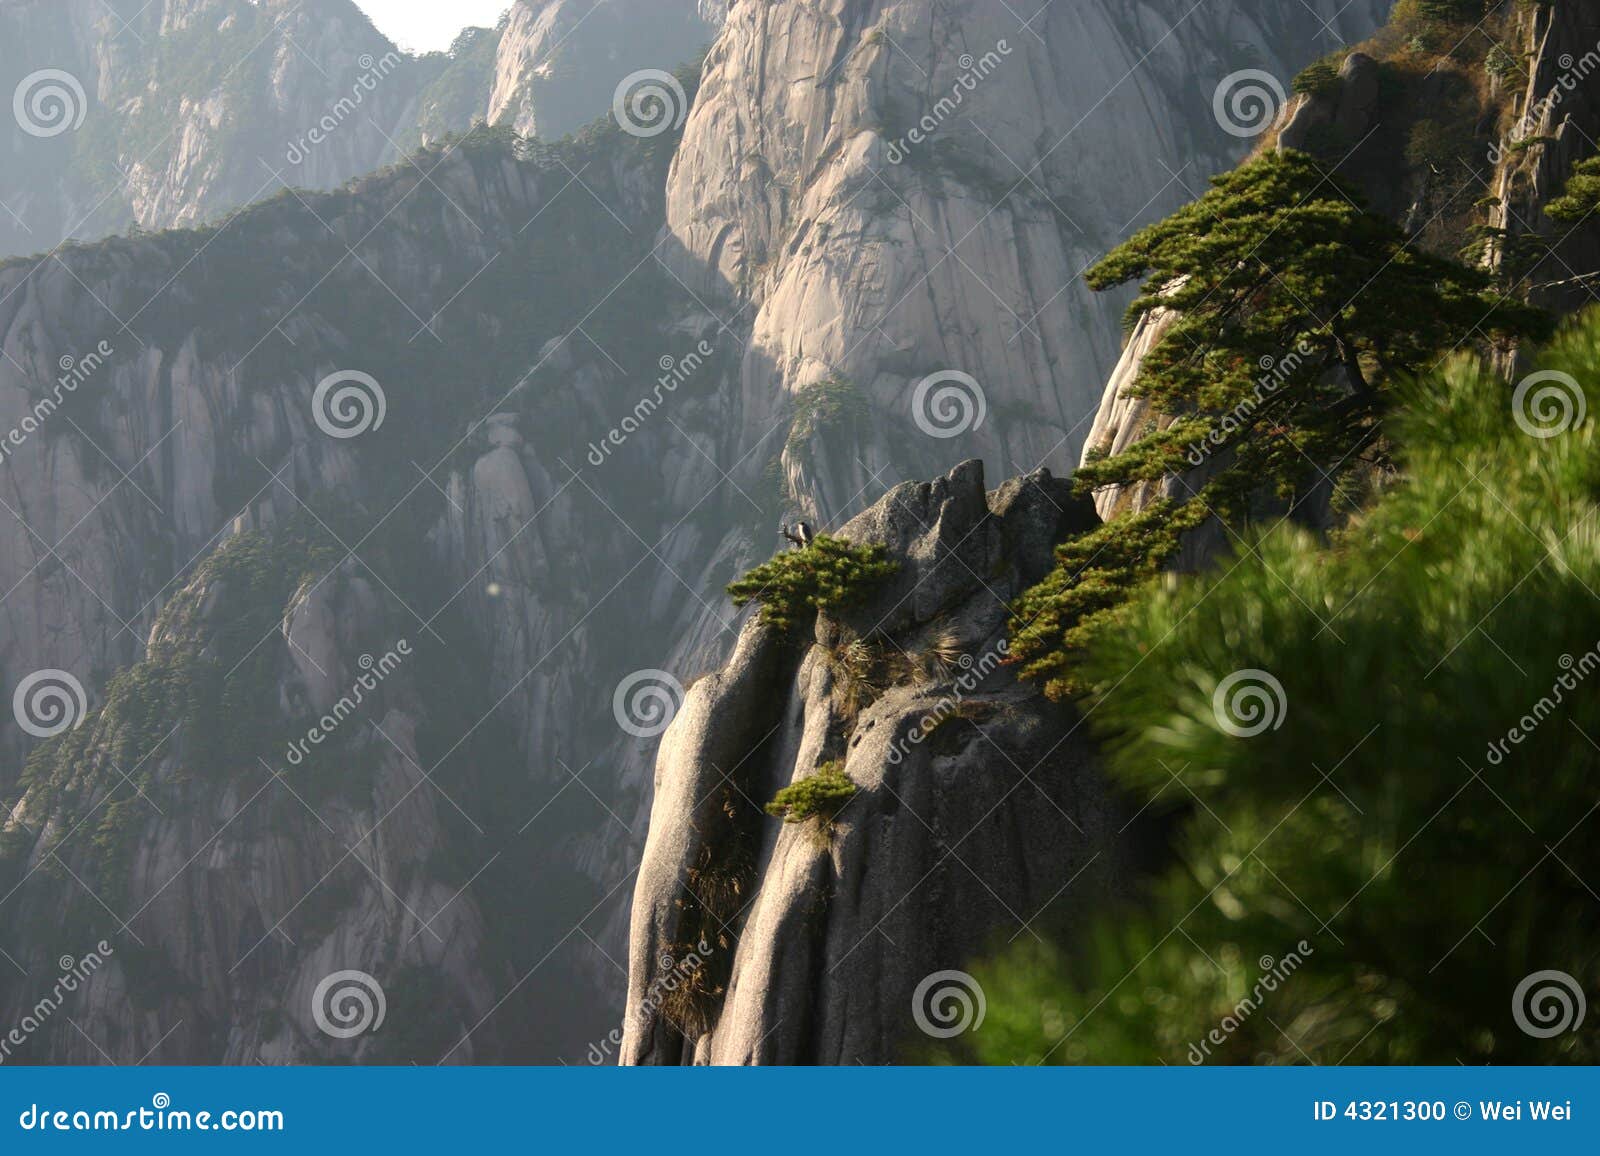 rocky mountainside